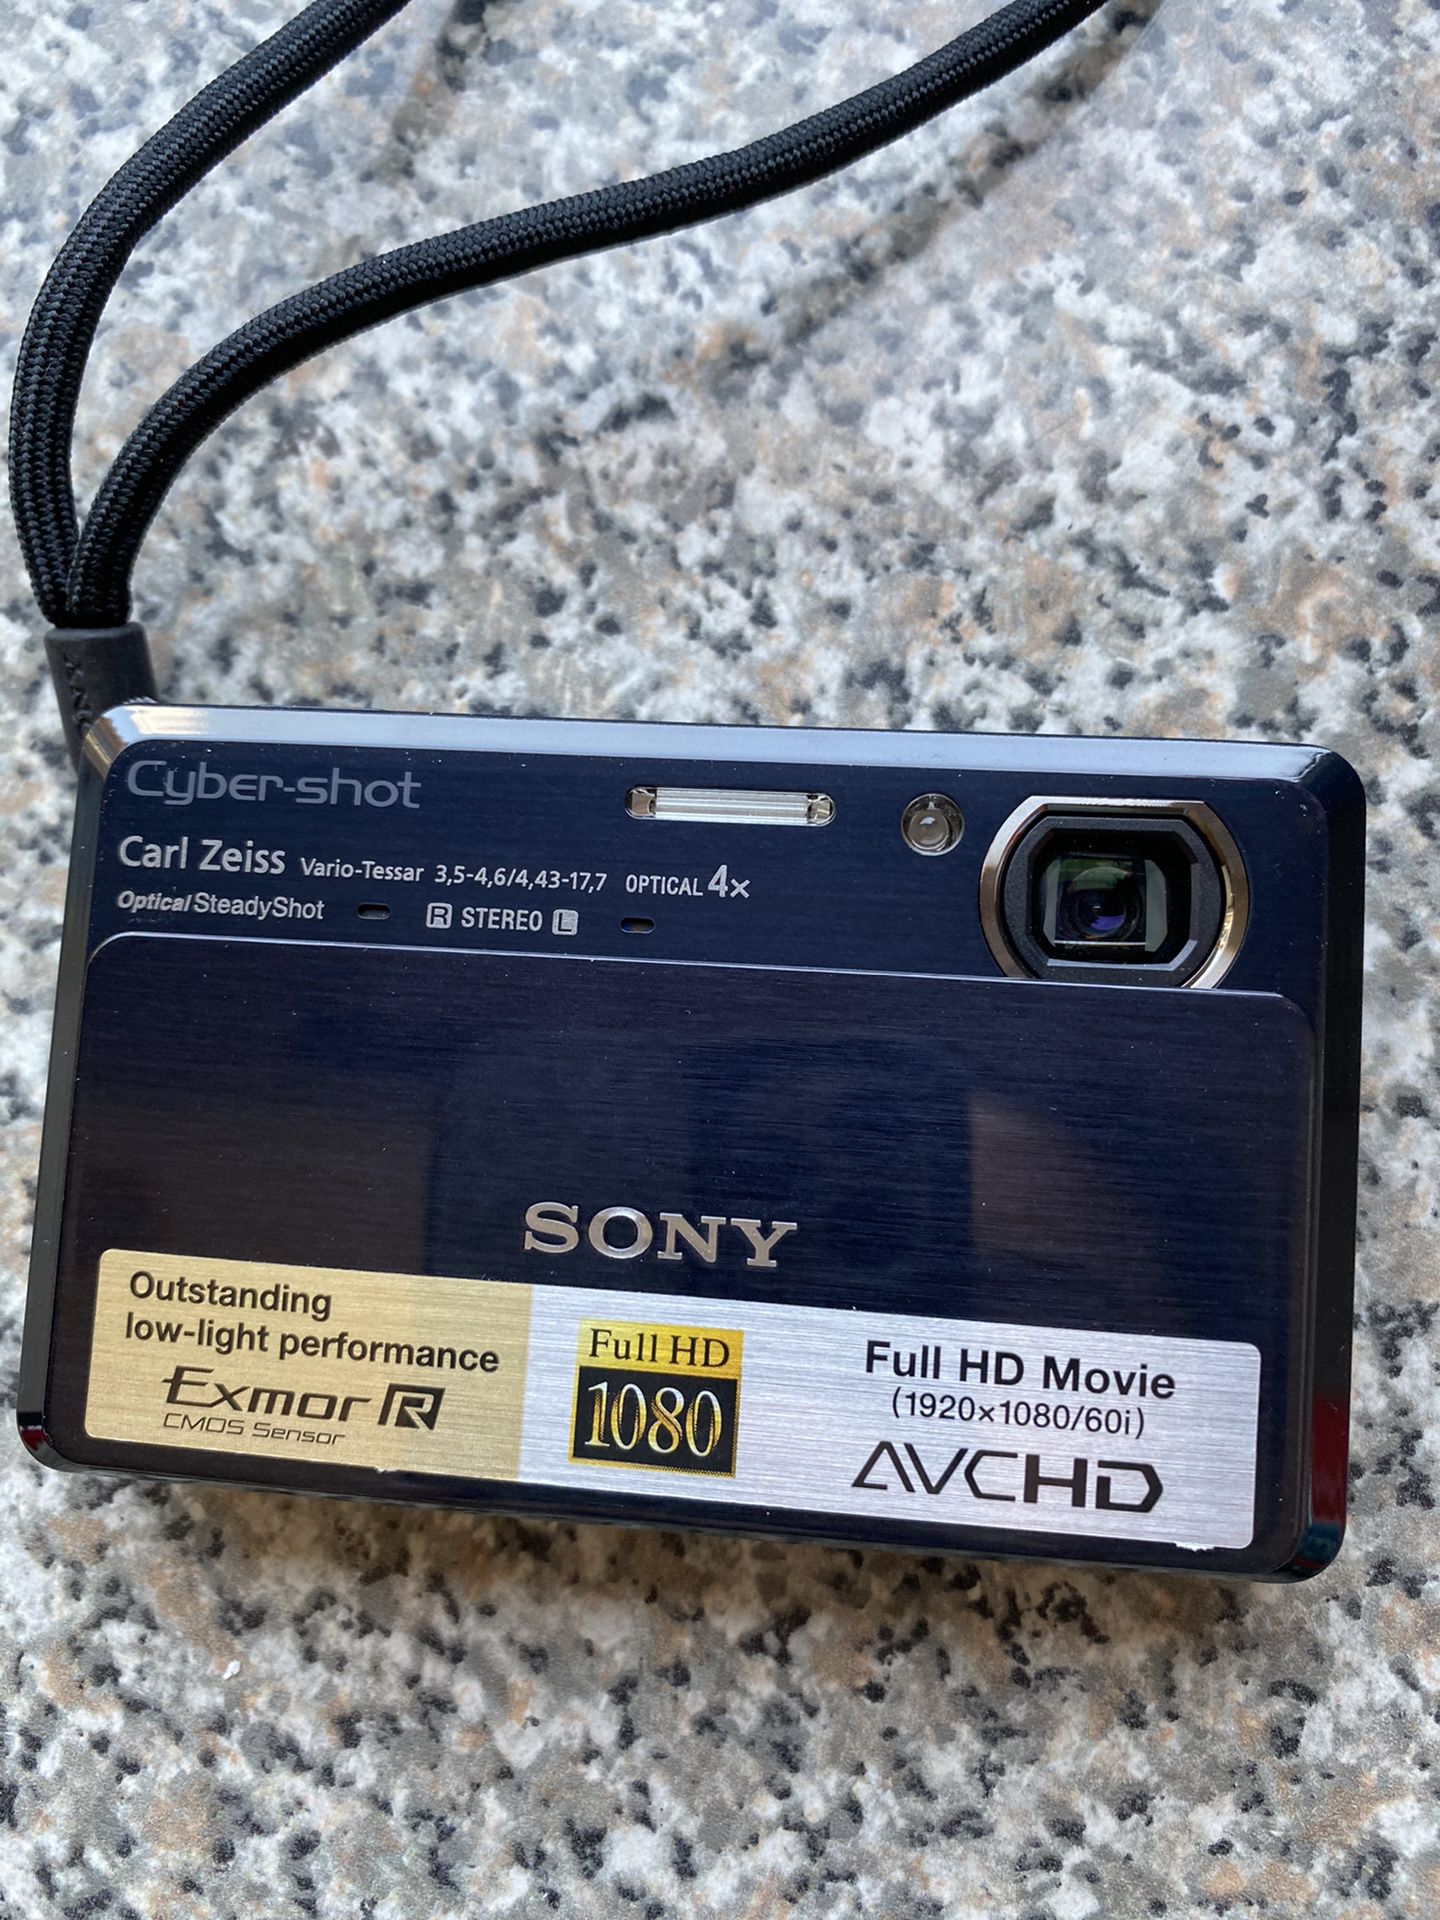 Sony cyber-shot DSC-TX7 10.2 MP digital camera - blue